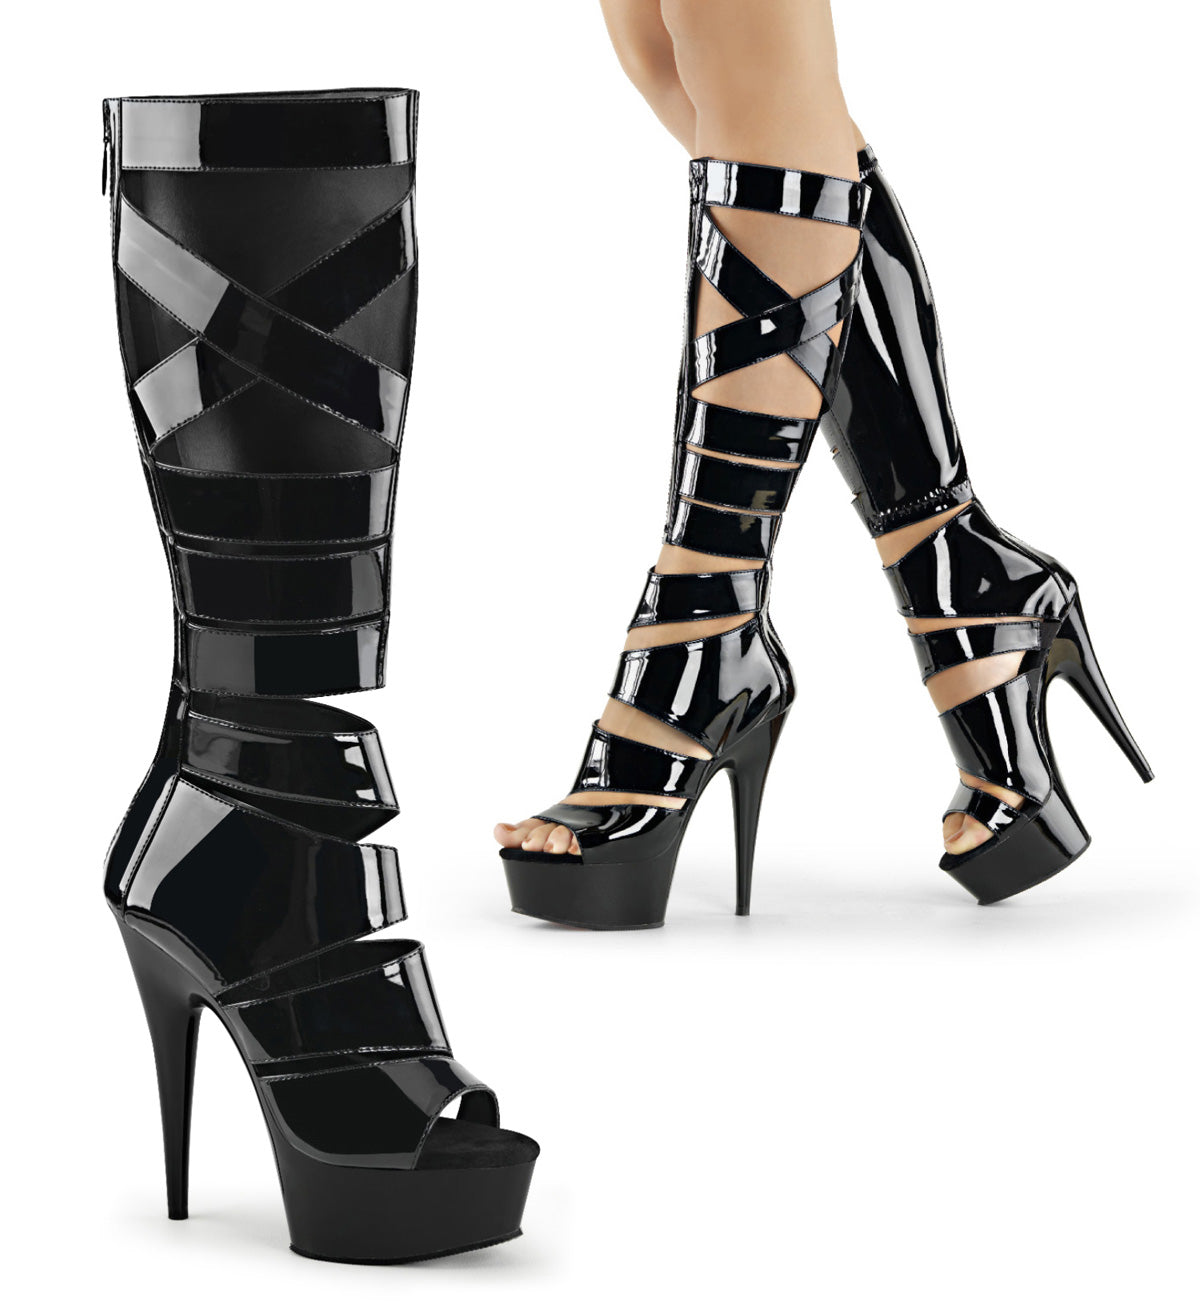 DELIGHT-600-49 6" Heel Black Patent Pole Dancing Platforms-Pleaser- Sexy Shoes